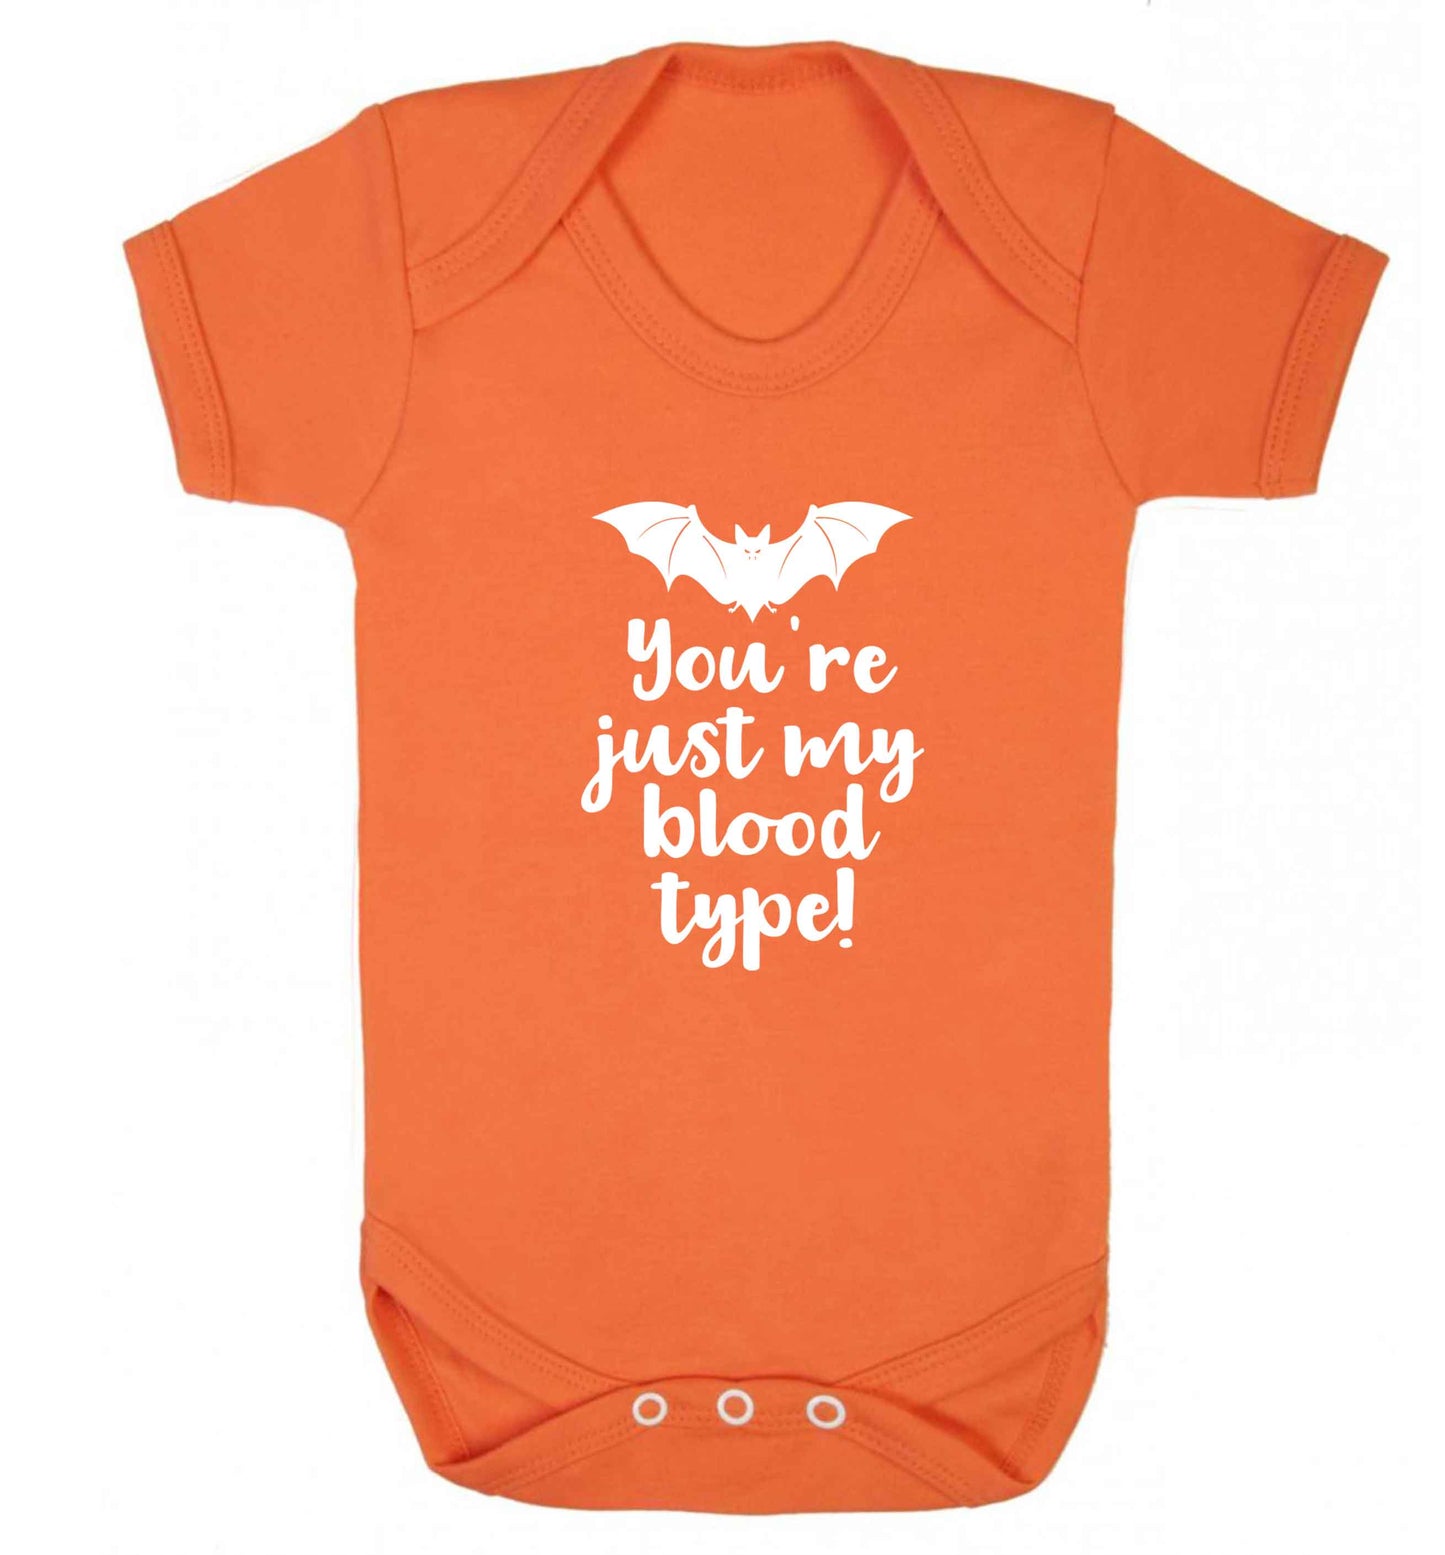 You're just my blood type baby vest orange 18-24 months